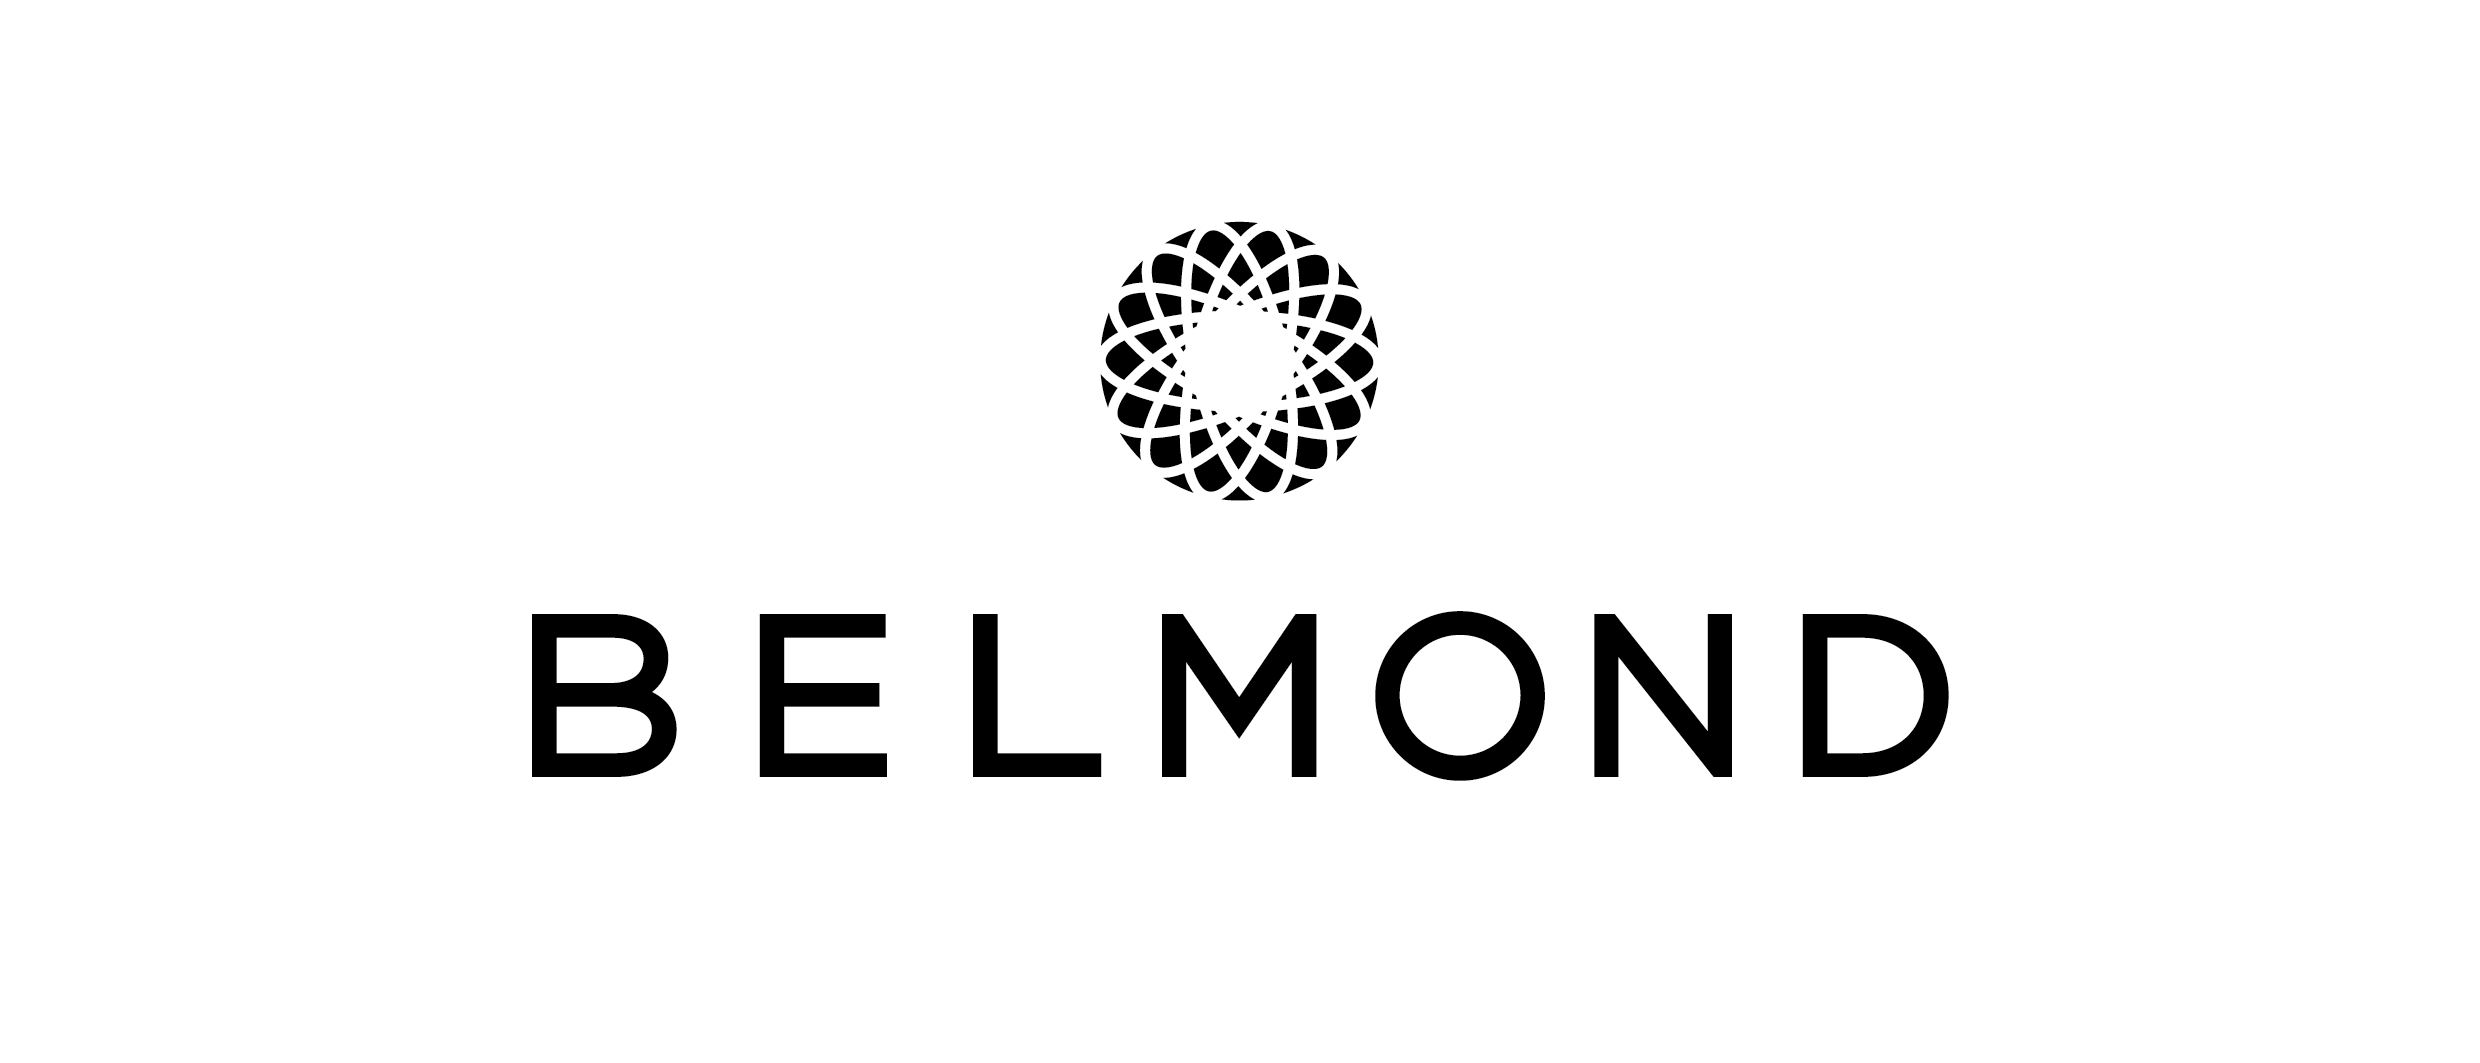 transparent belmond logo